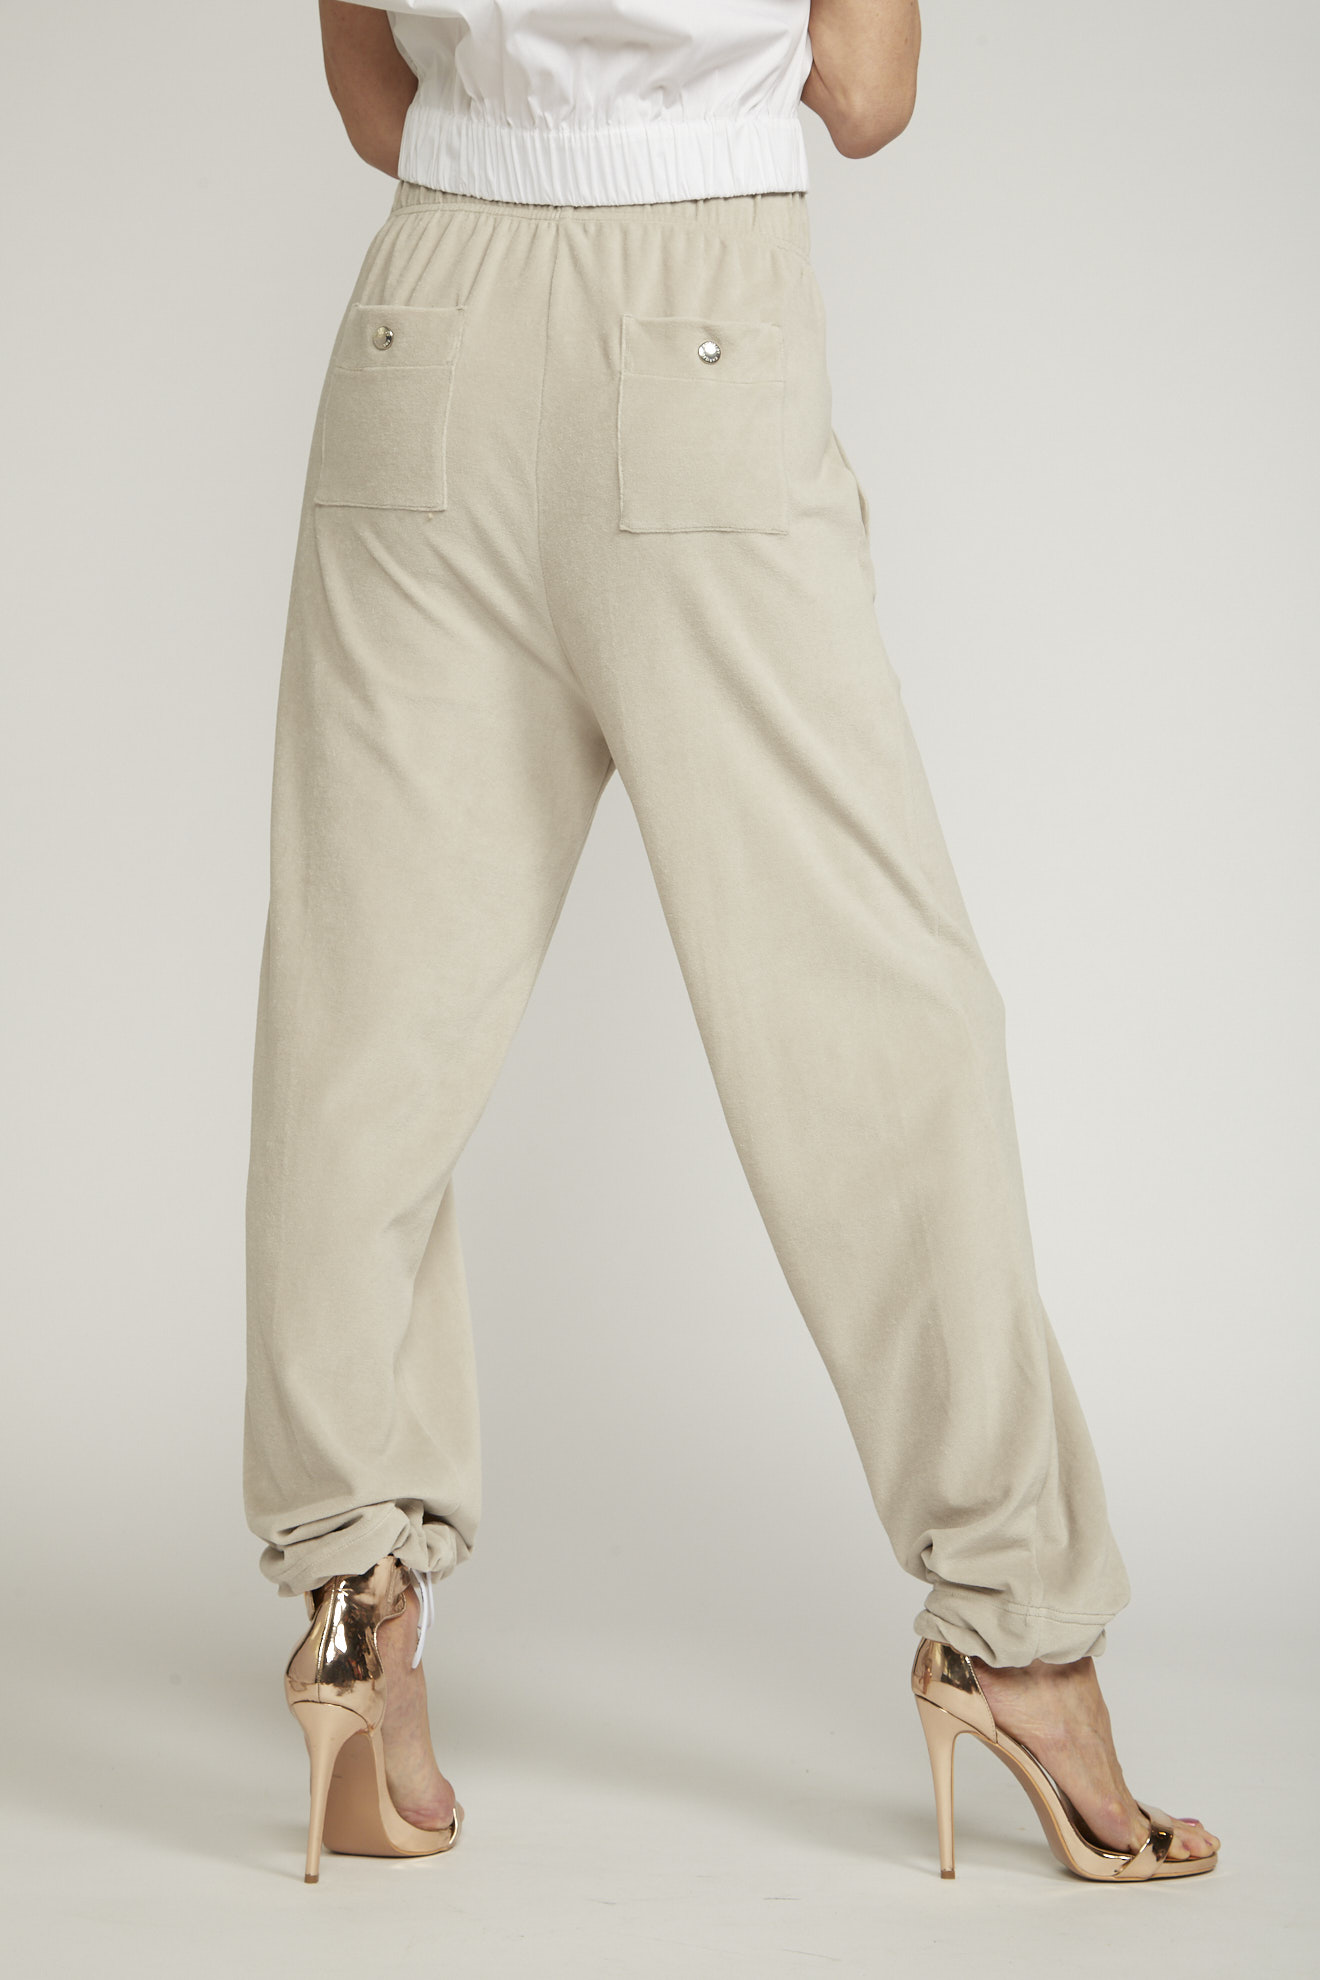 khrisjoy pants grey plain cotton model front